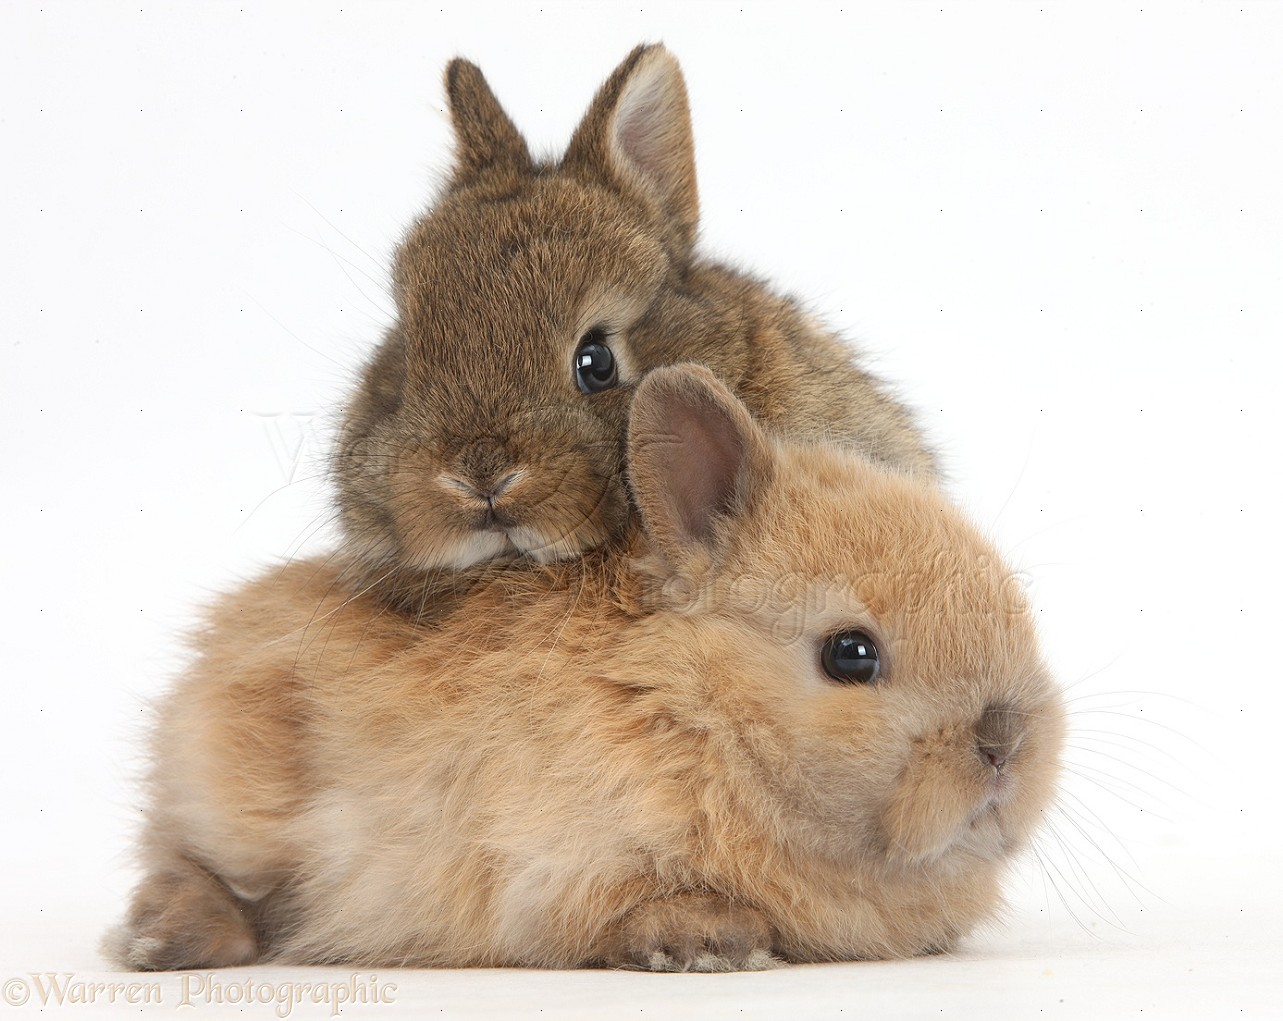 39743-Cute-baby-bunnies-white-background.jpg